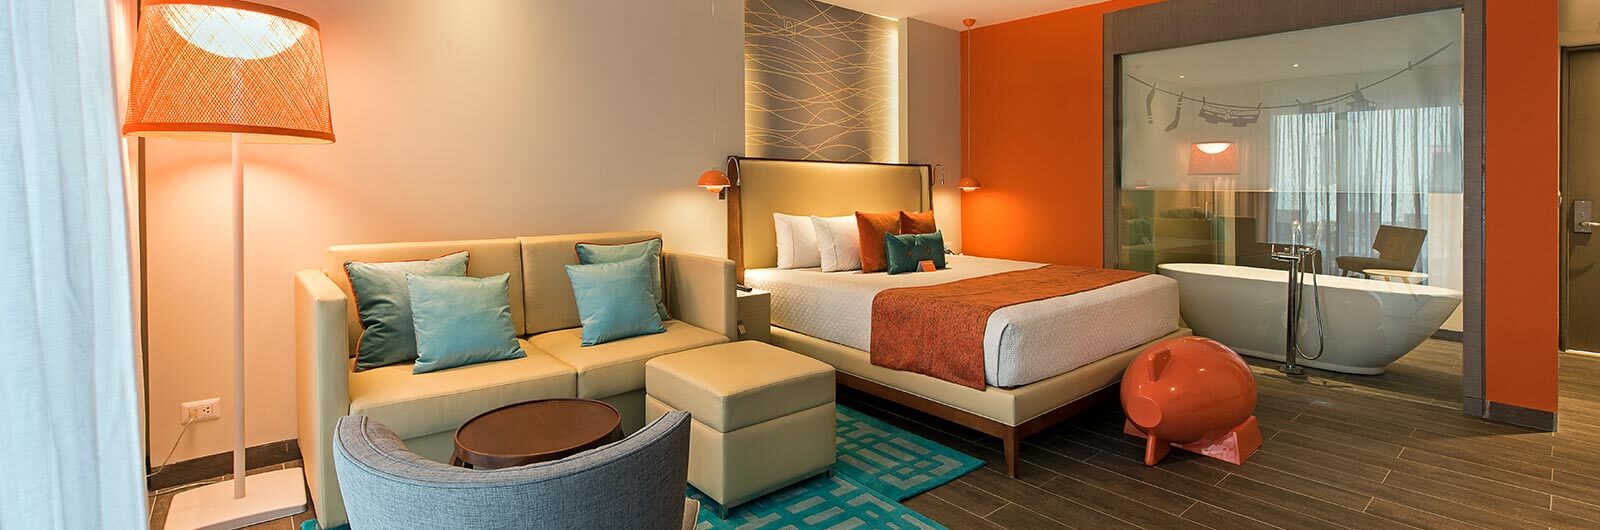 Nickelodeon Resort Punta Cana Accommodations - Pad Suite